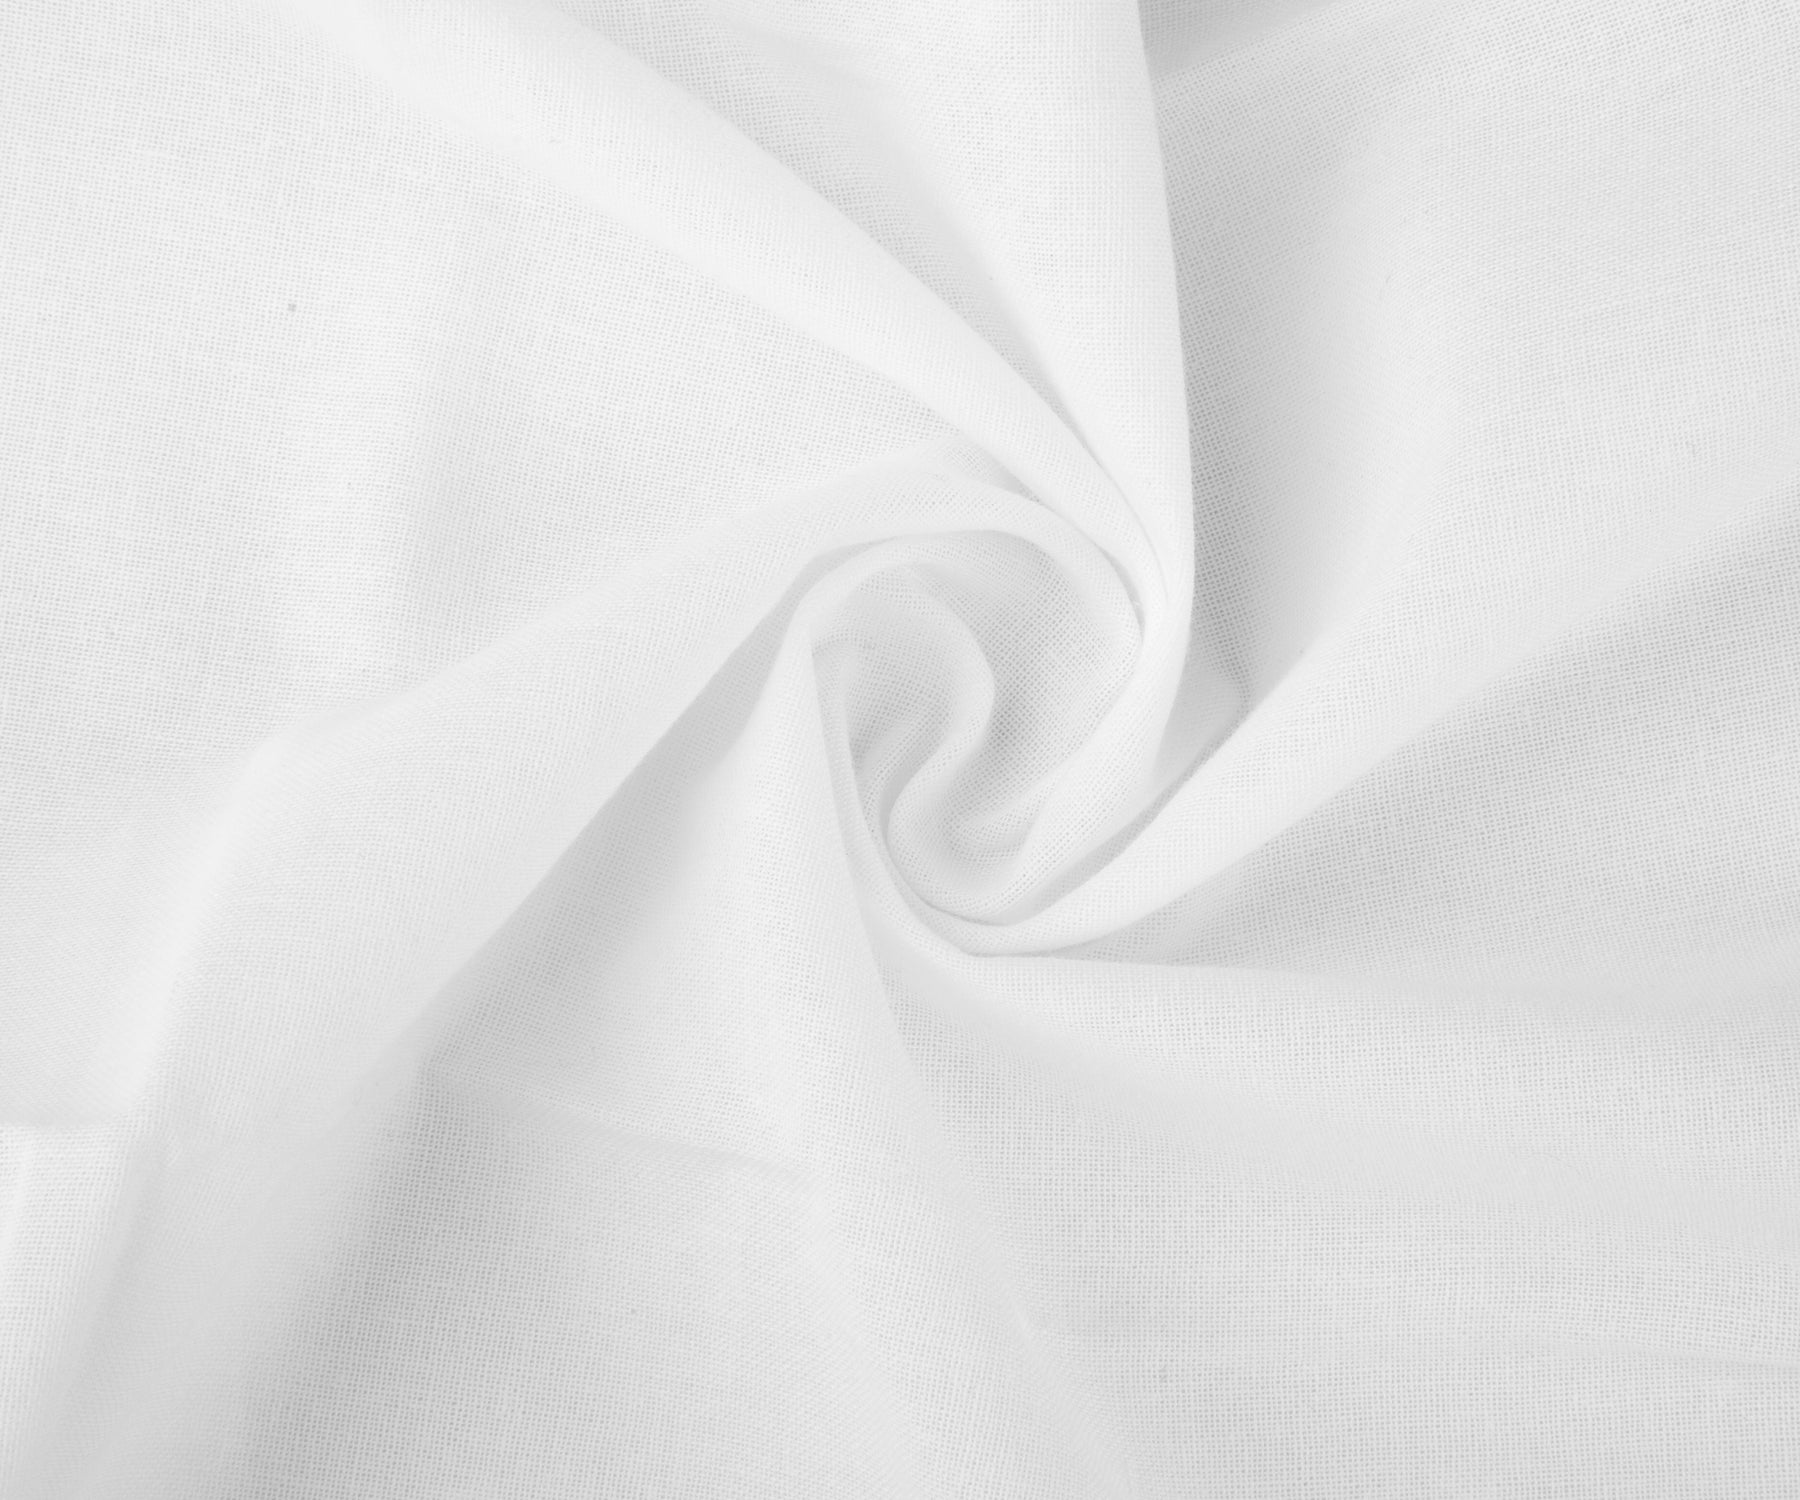 Bulk Supplier Of Flour Sack Dish Towels Sets - Manufacturer of Canvas Bags,  Towels, Jersey Bed Sheets